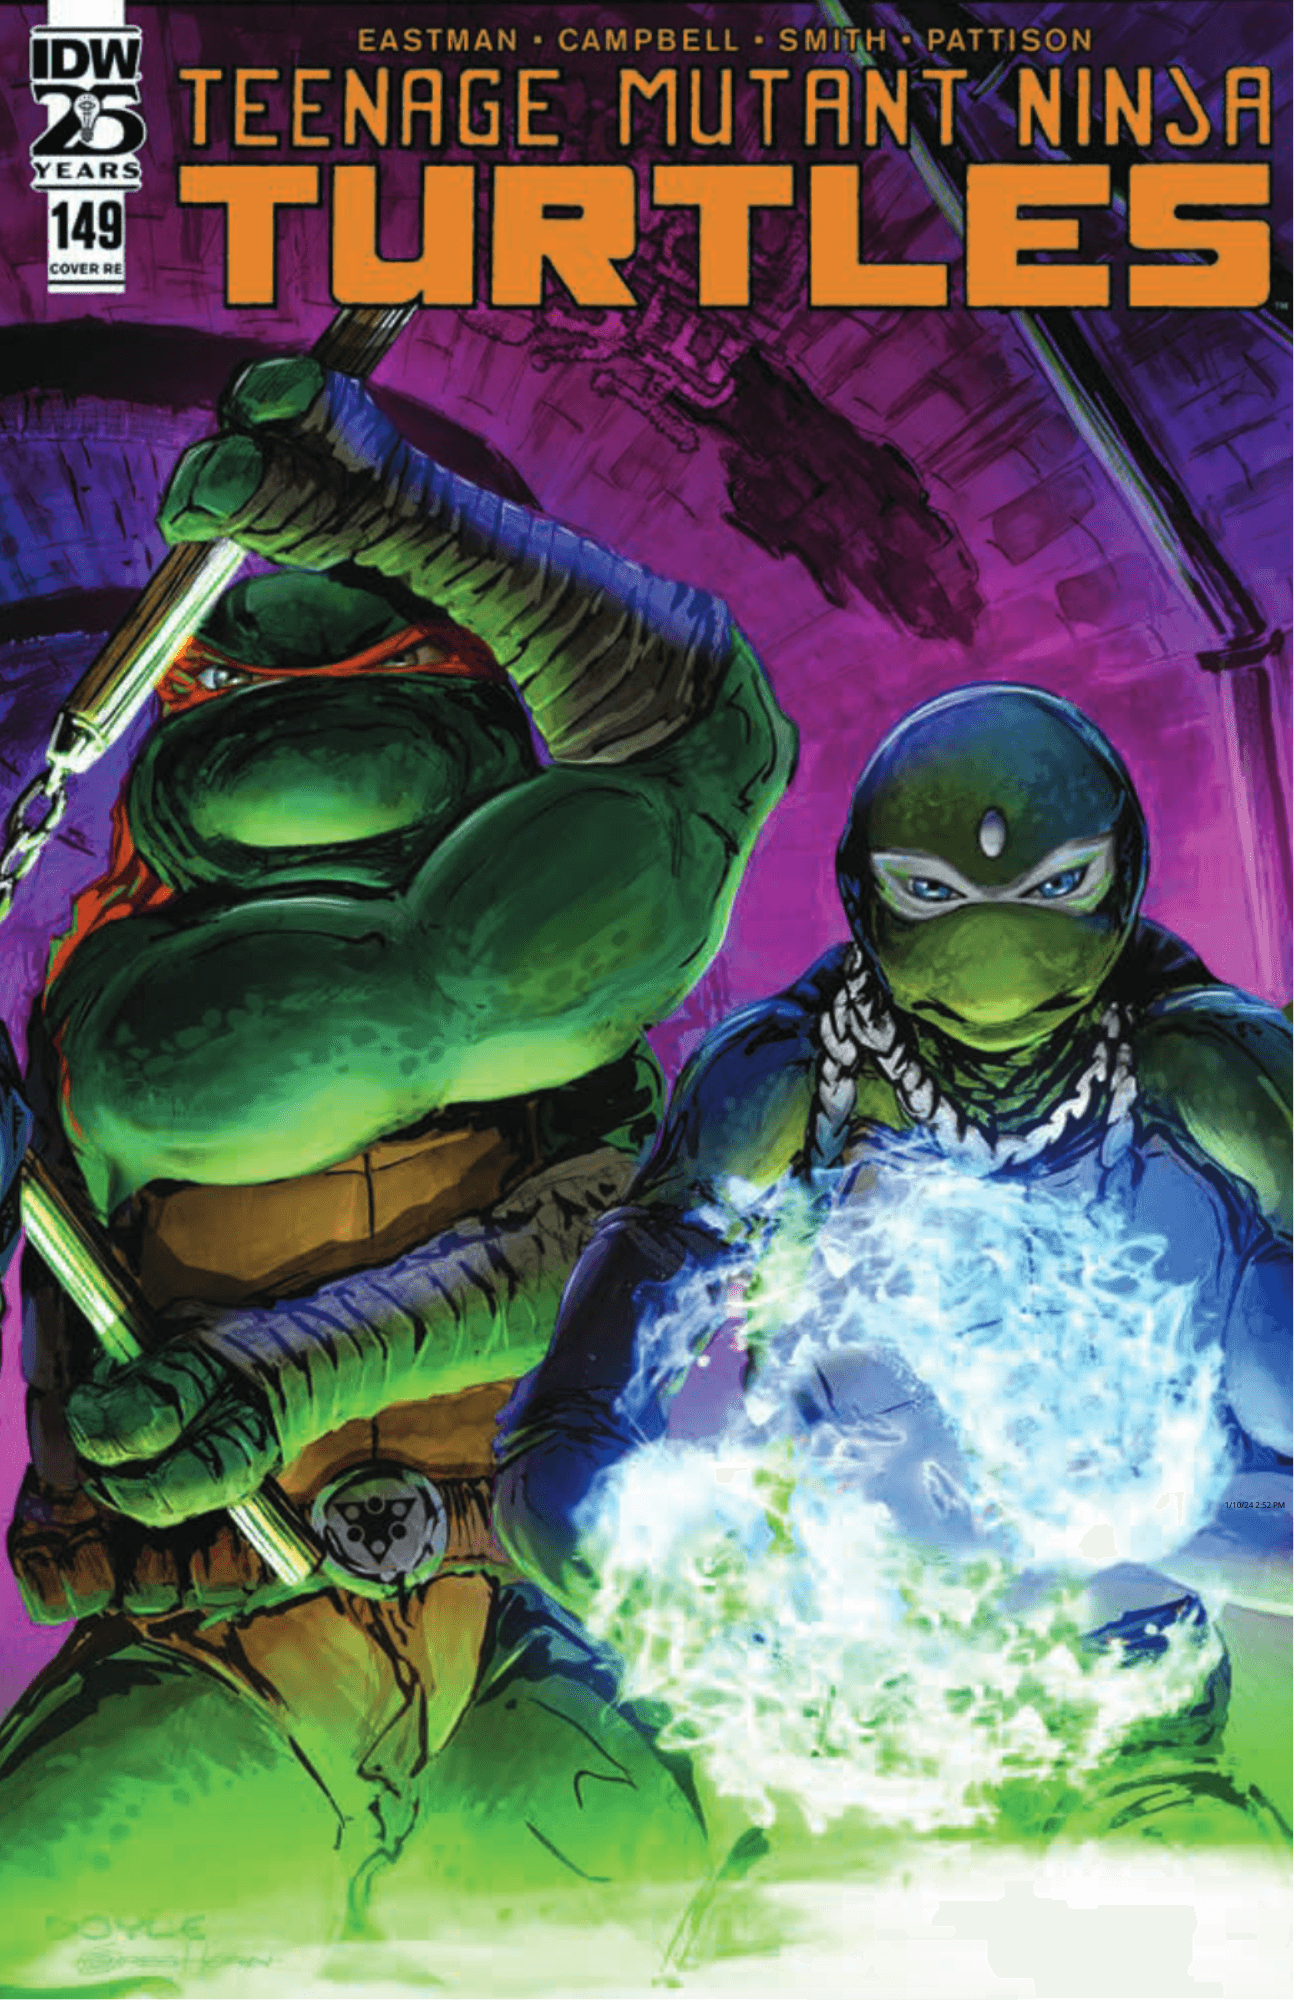 Teenage Mutant Ninja Turtles #149 - Lightning Comix Exclusive - Trade Dress - LIGHTNING COMIX